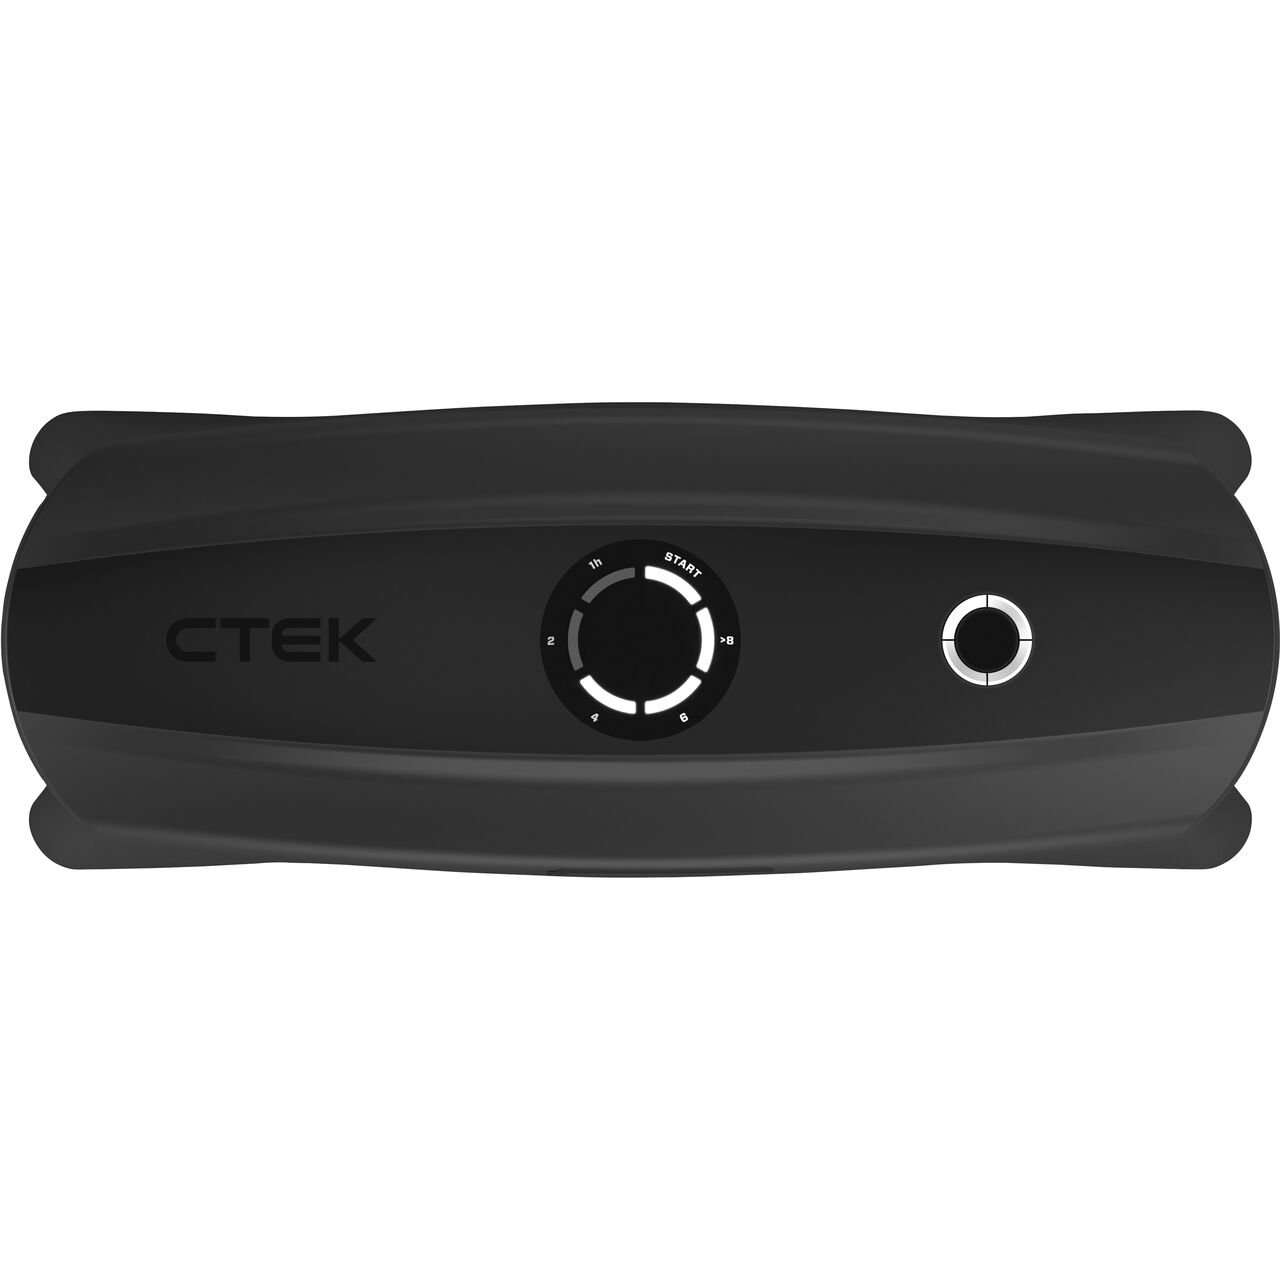 CTEK Batterieladegerät CS Free Neutral kaufen - POLO Motorrad